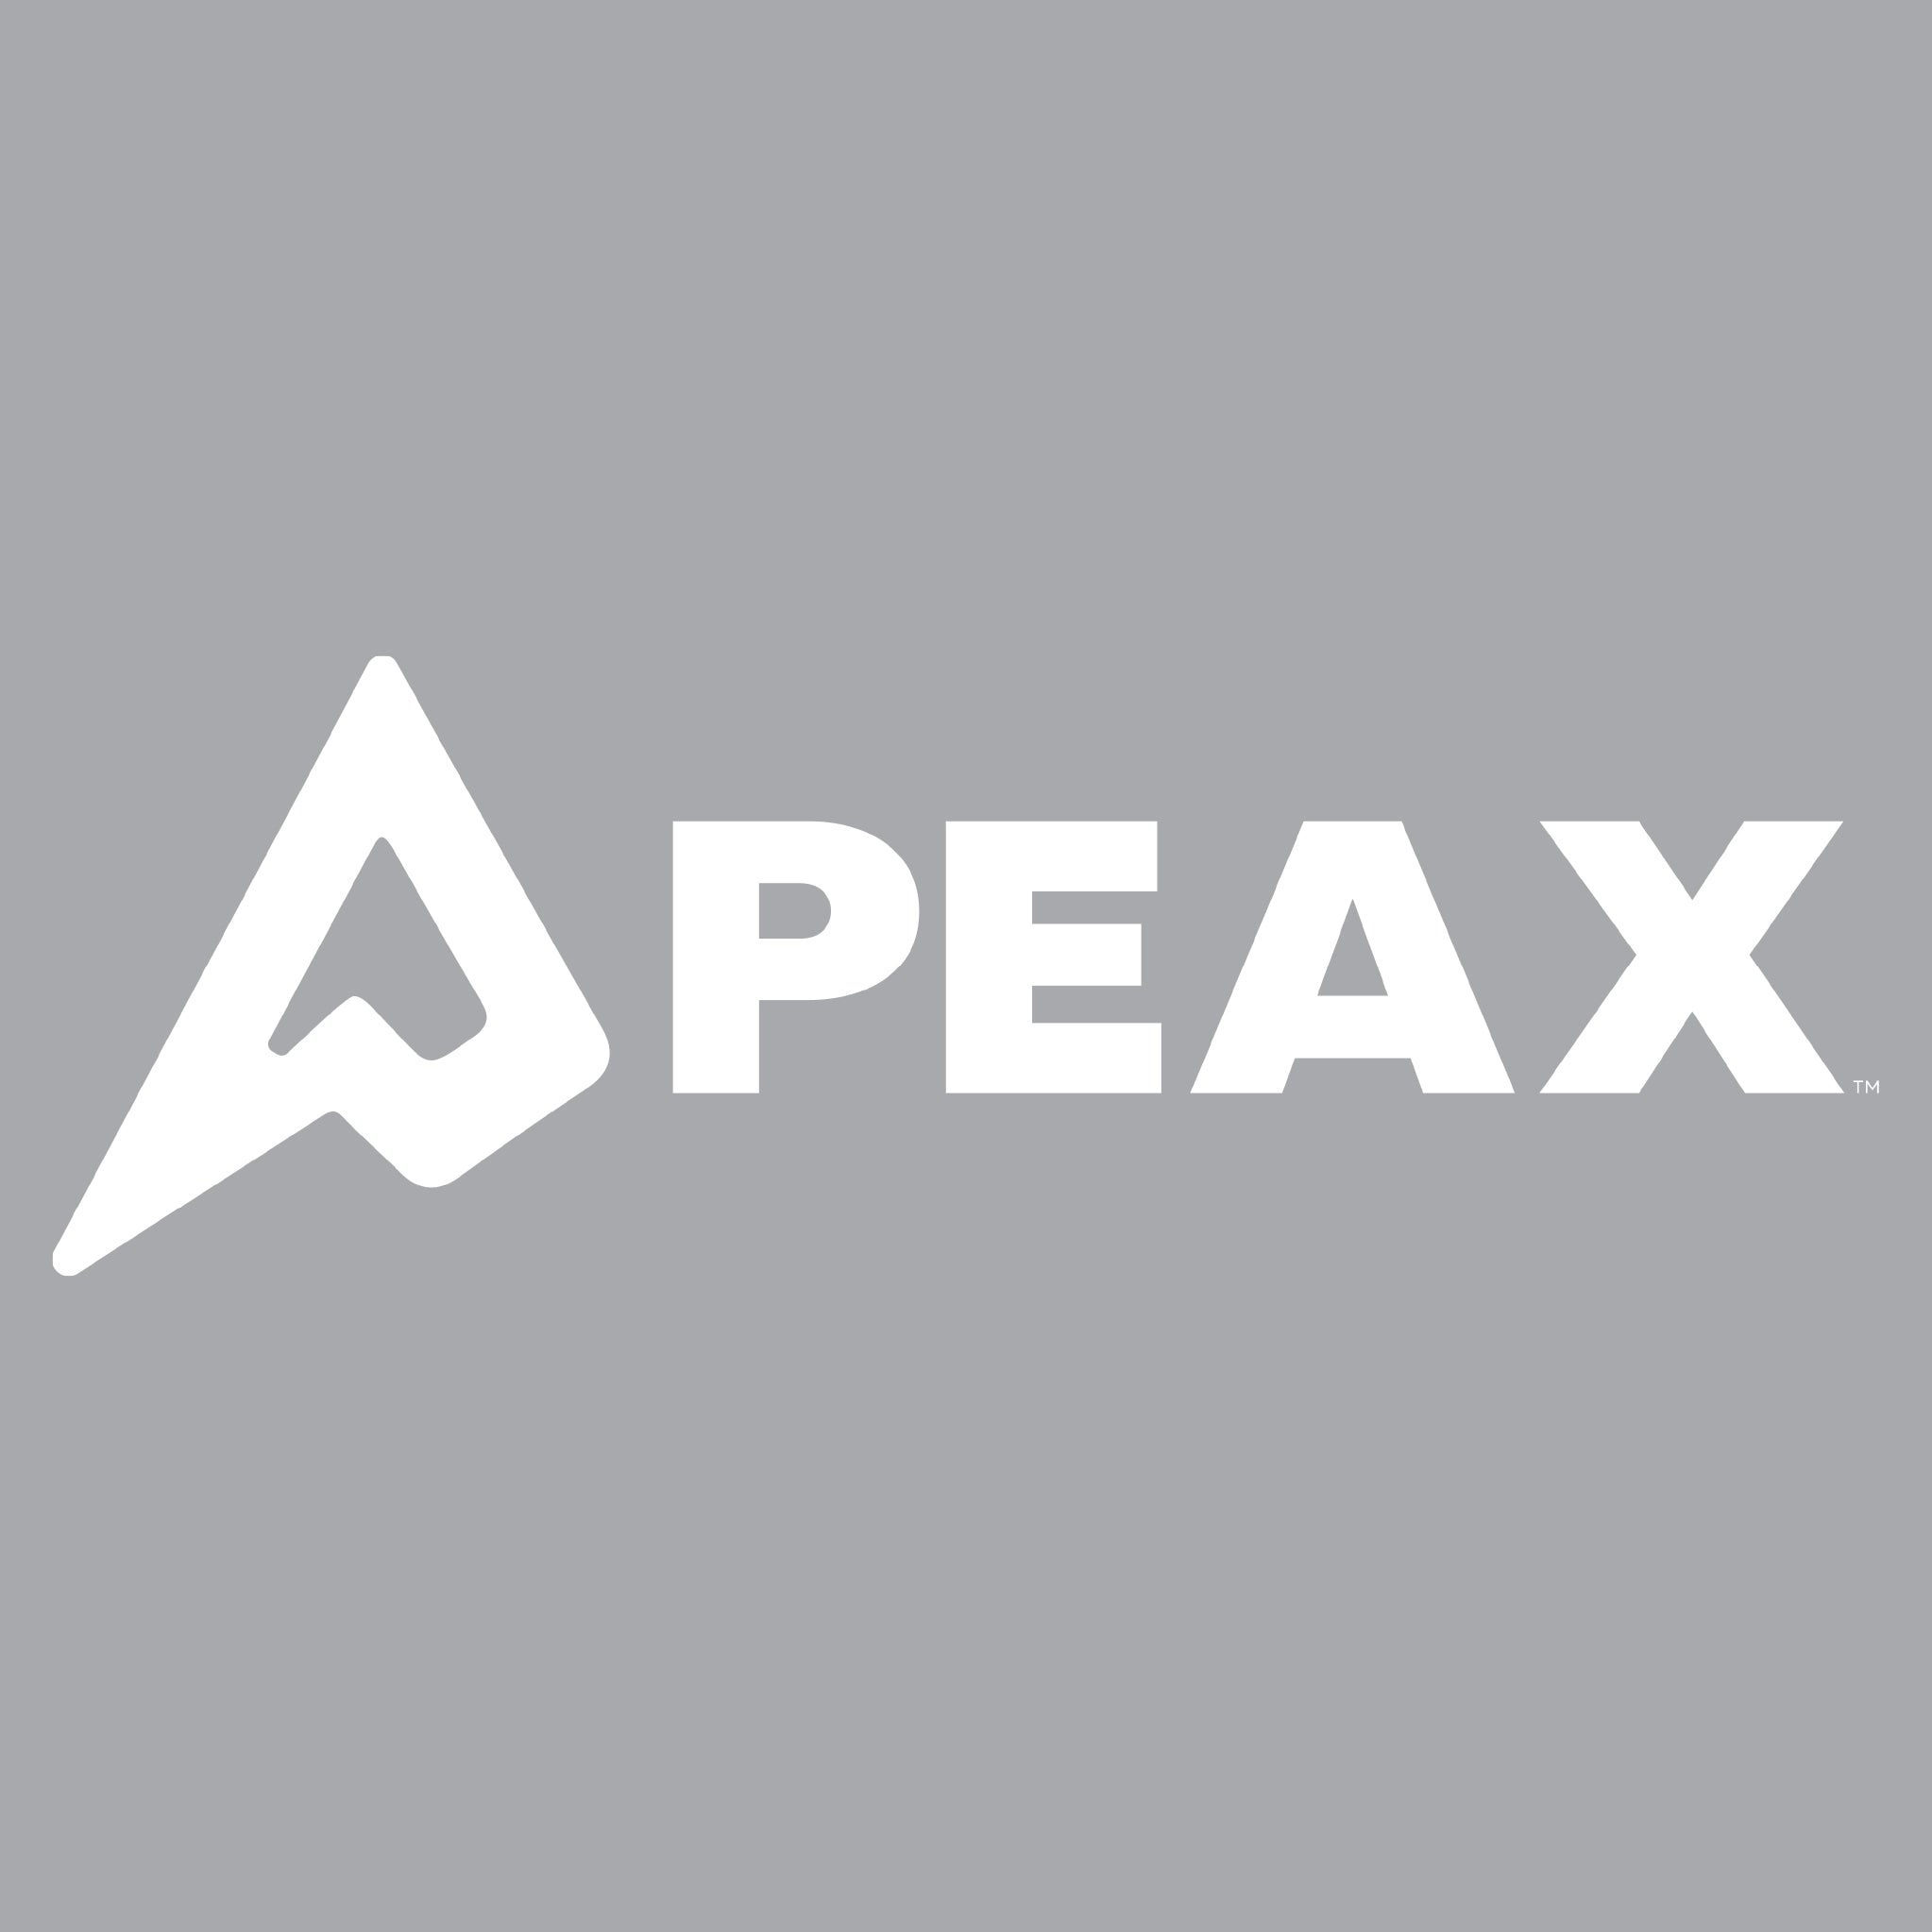 PEAX - TRANSFER DECAL STICKER (Large)